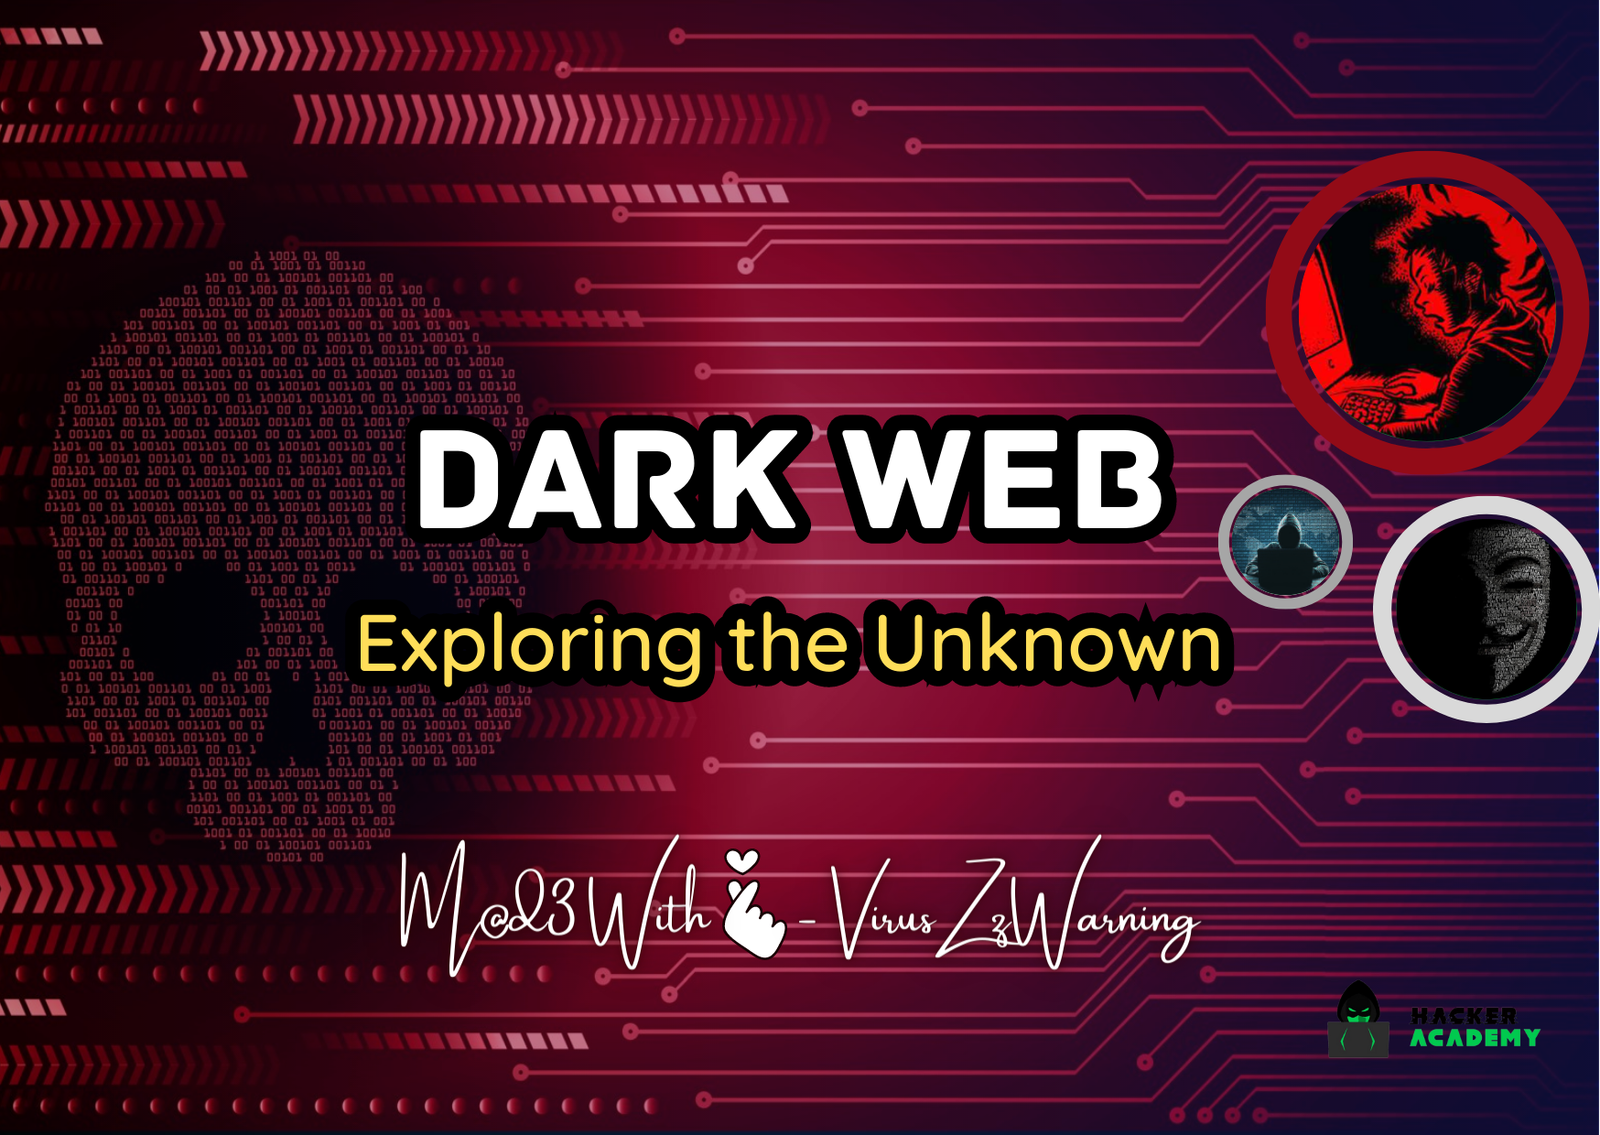 Dark-Web: Exploring the Unknown